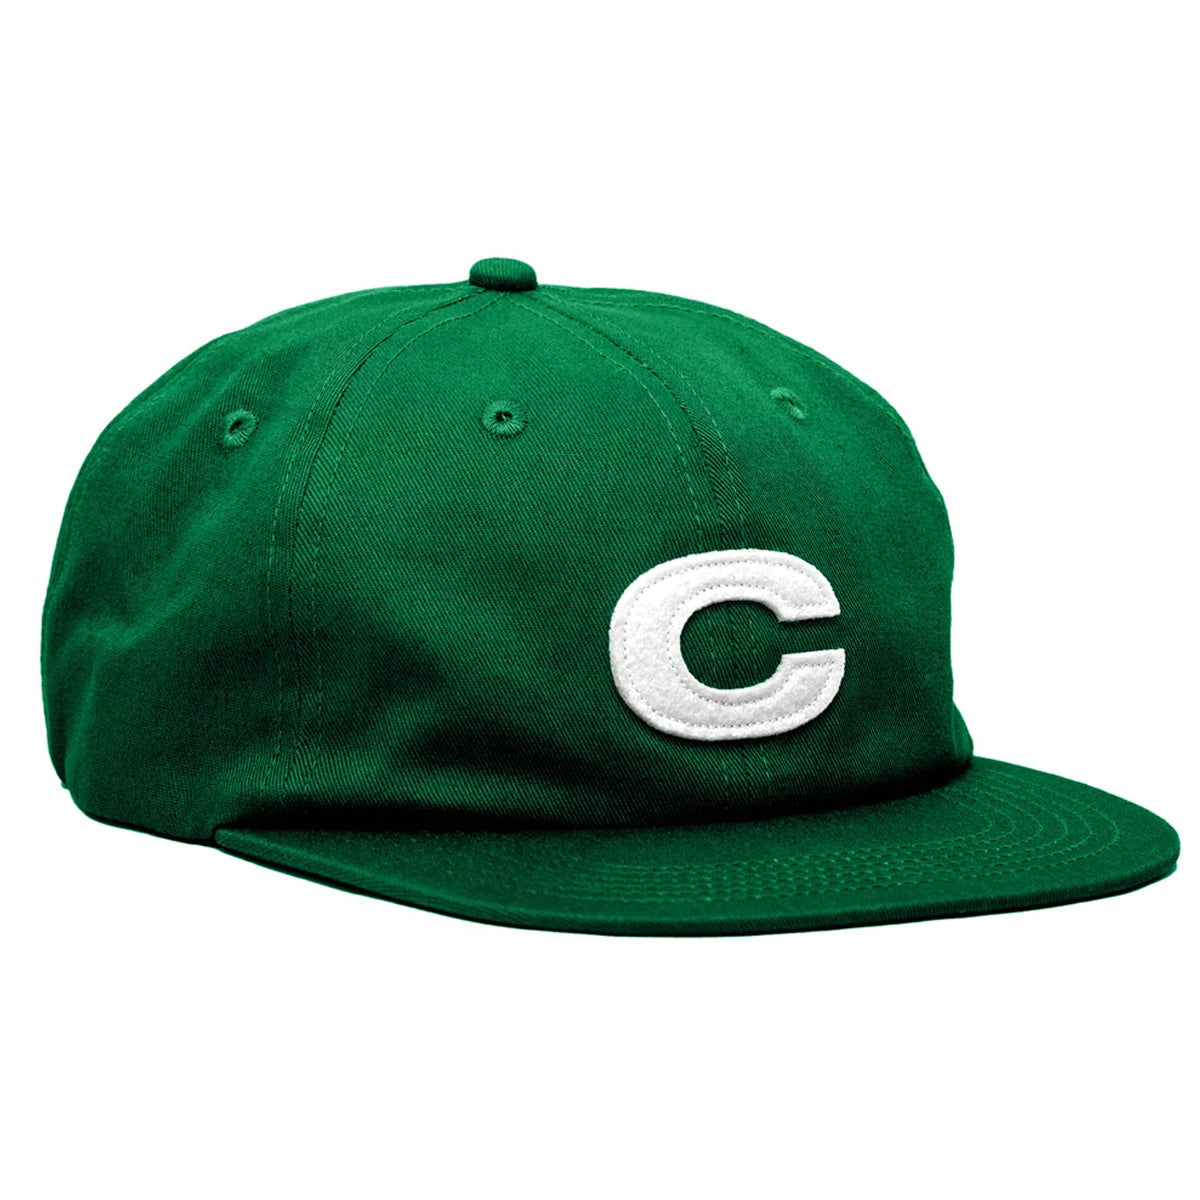 Cleaver C Cap - Green